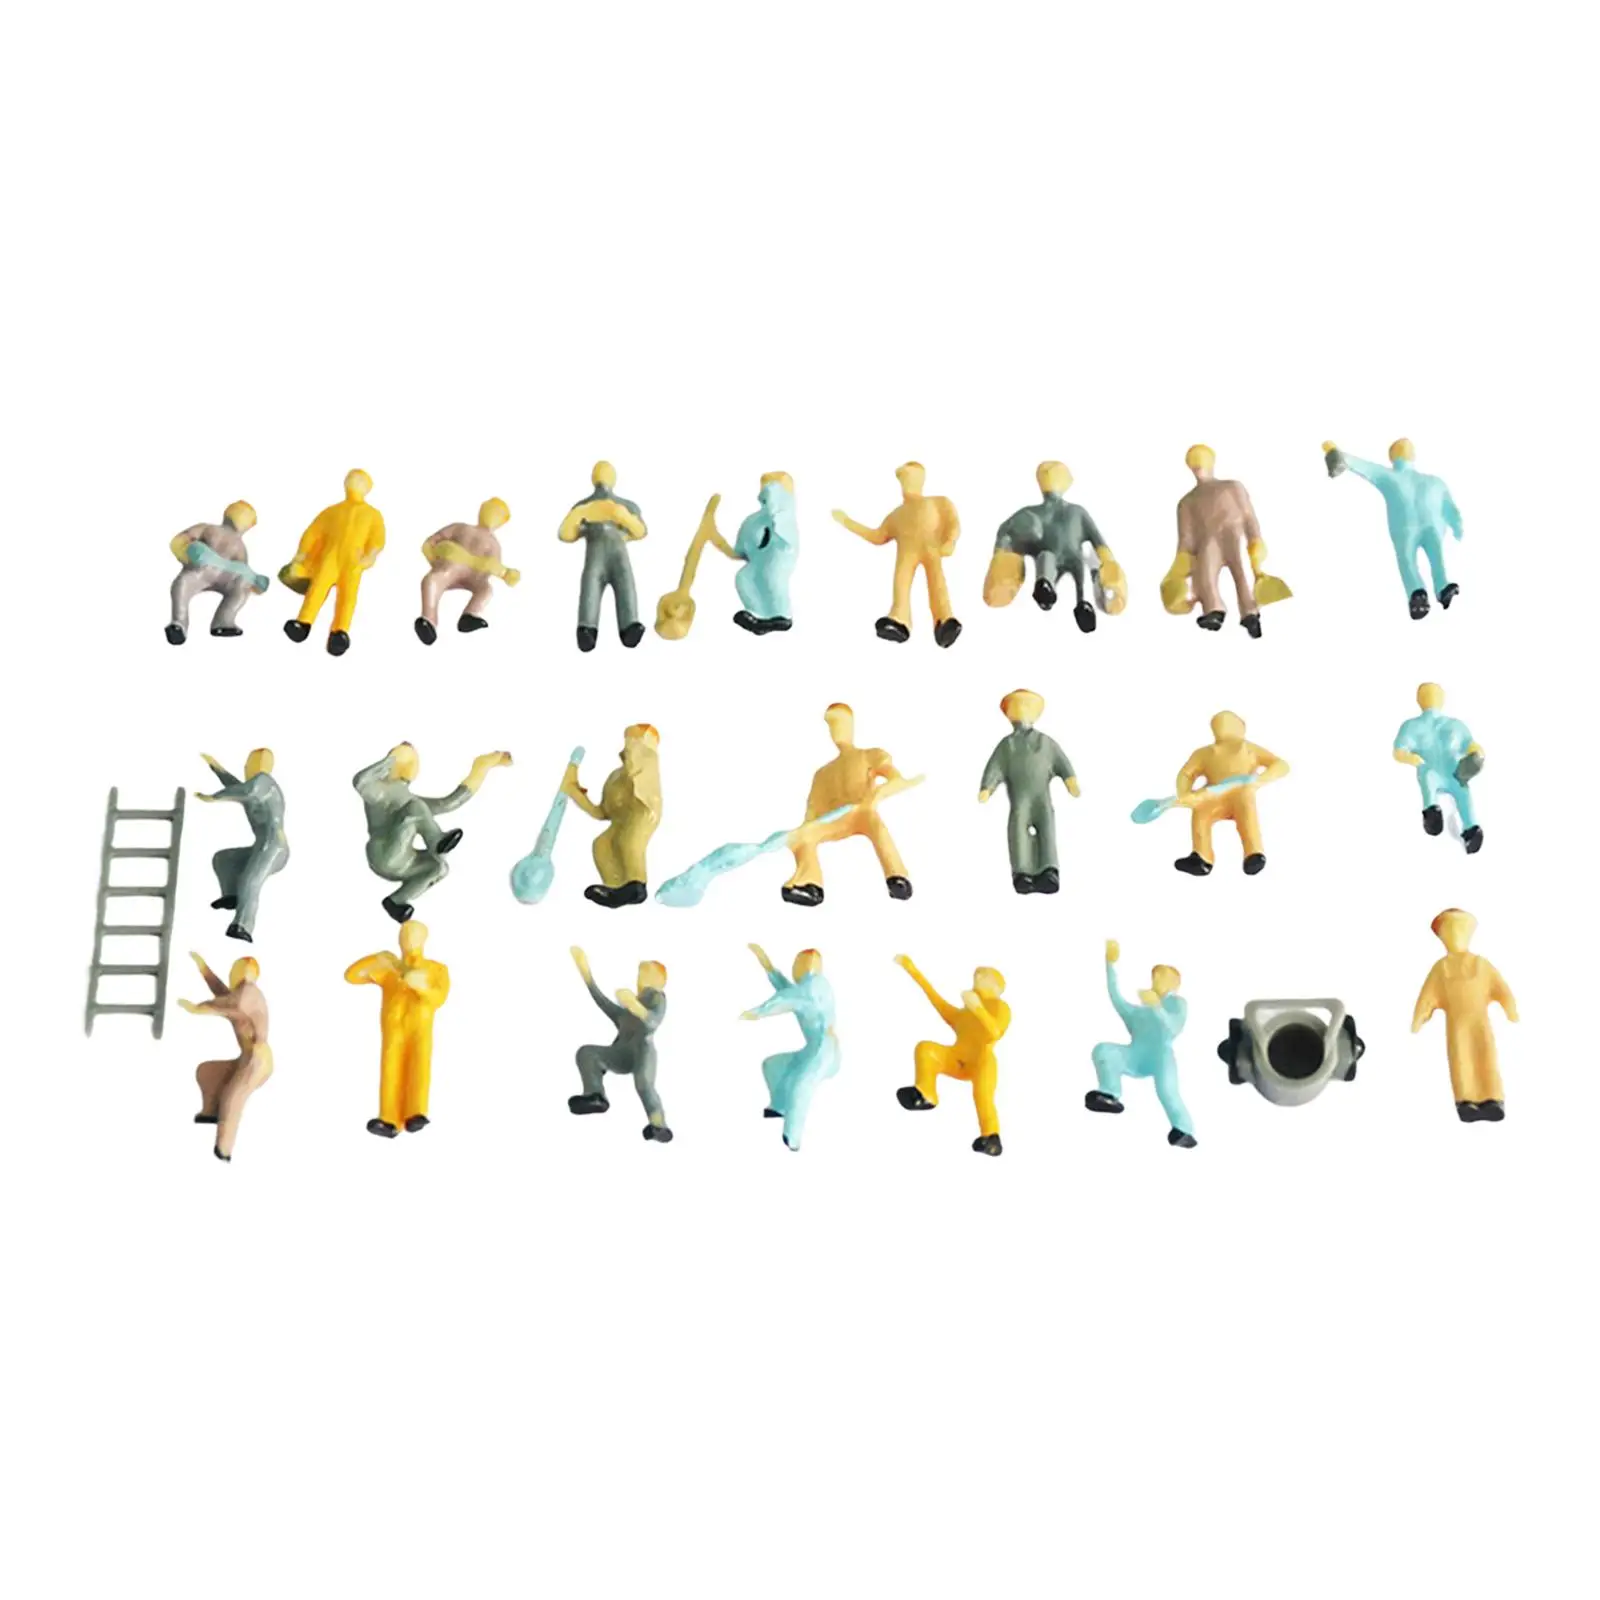 25Pcs 1/87 Miniature Model Railroad Worker Figures Building Scenery HO Scale Miniature Scenes Hand Painted Figurines Decoration